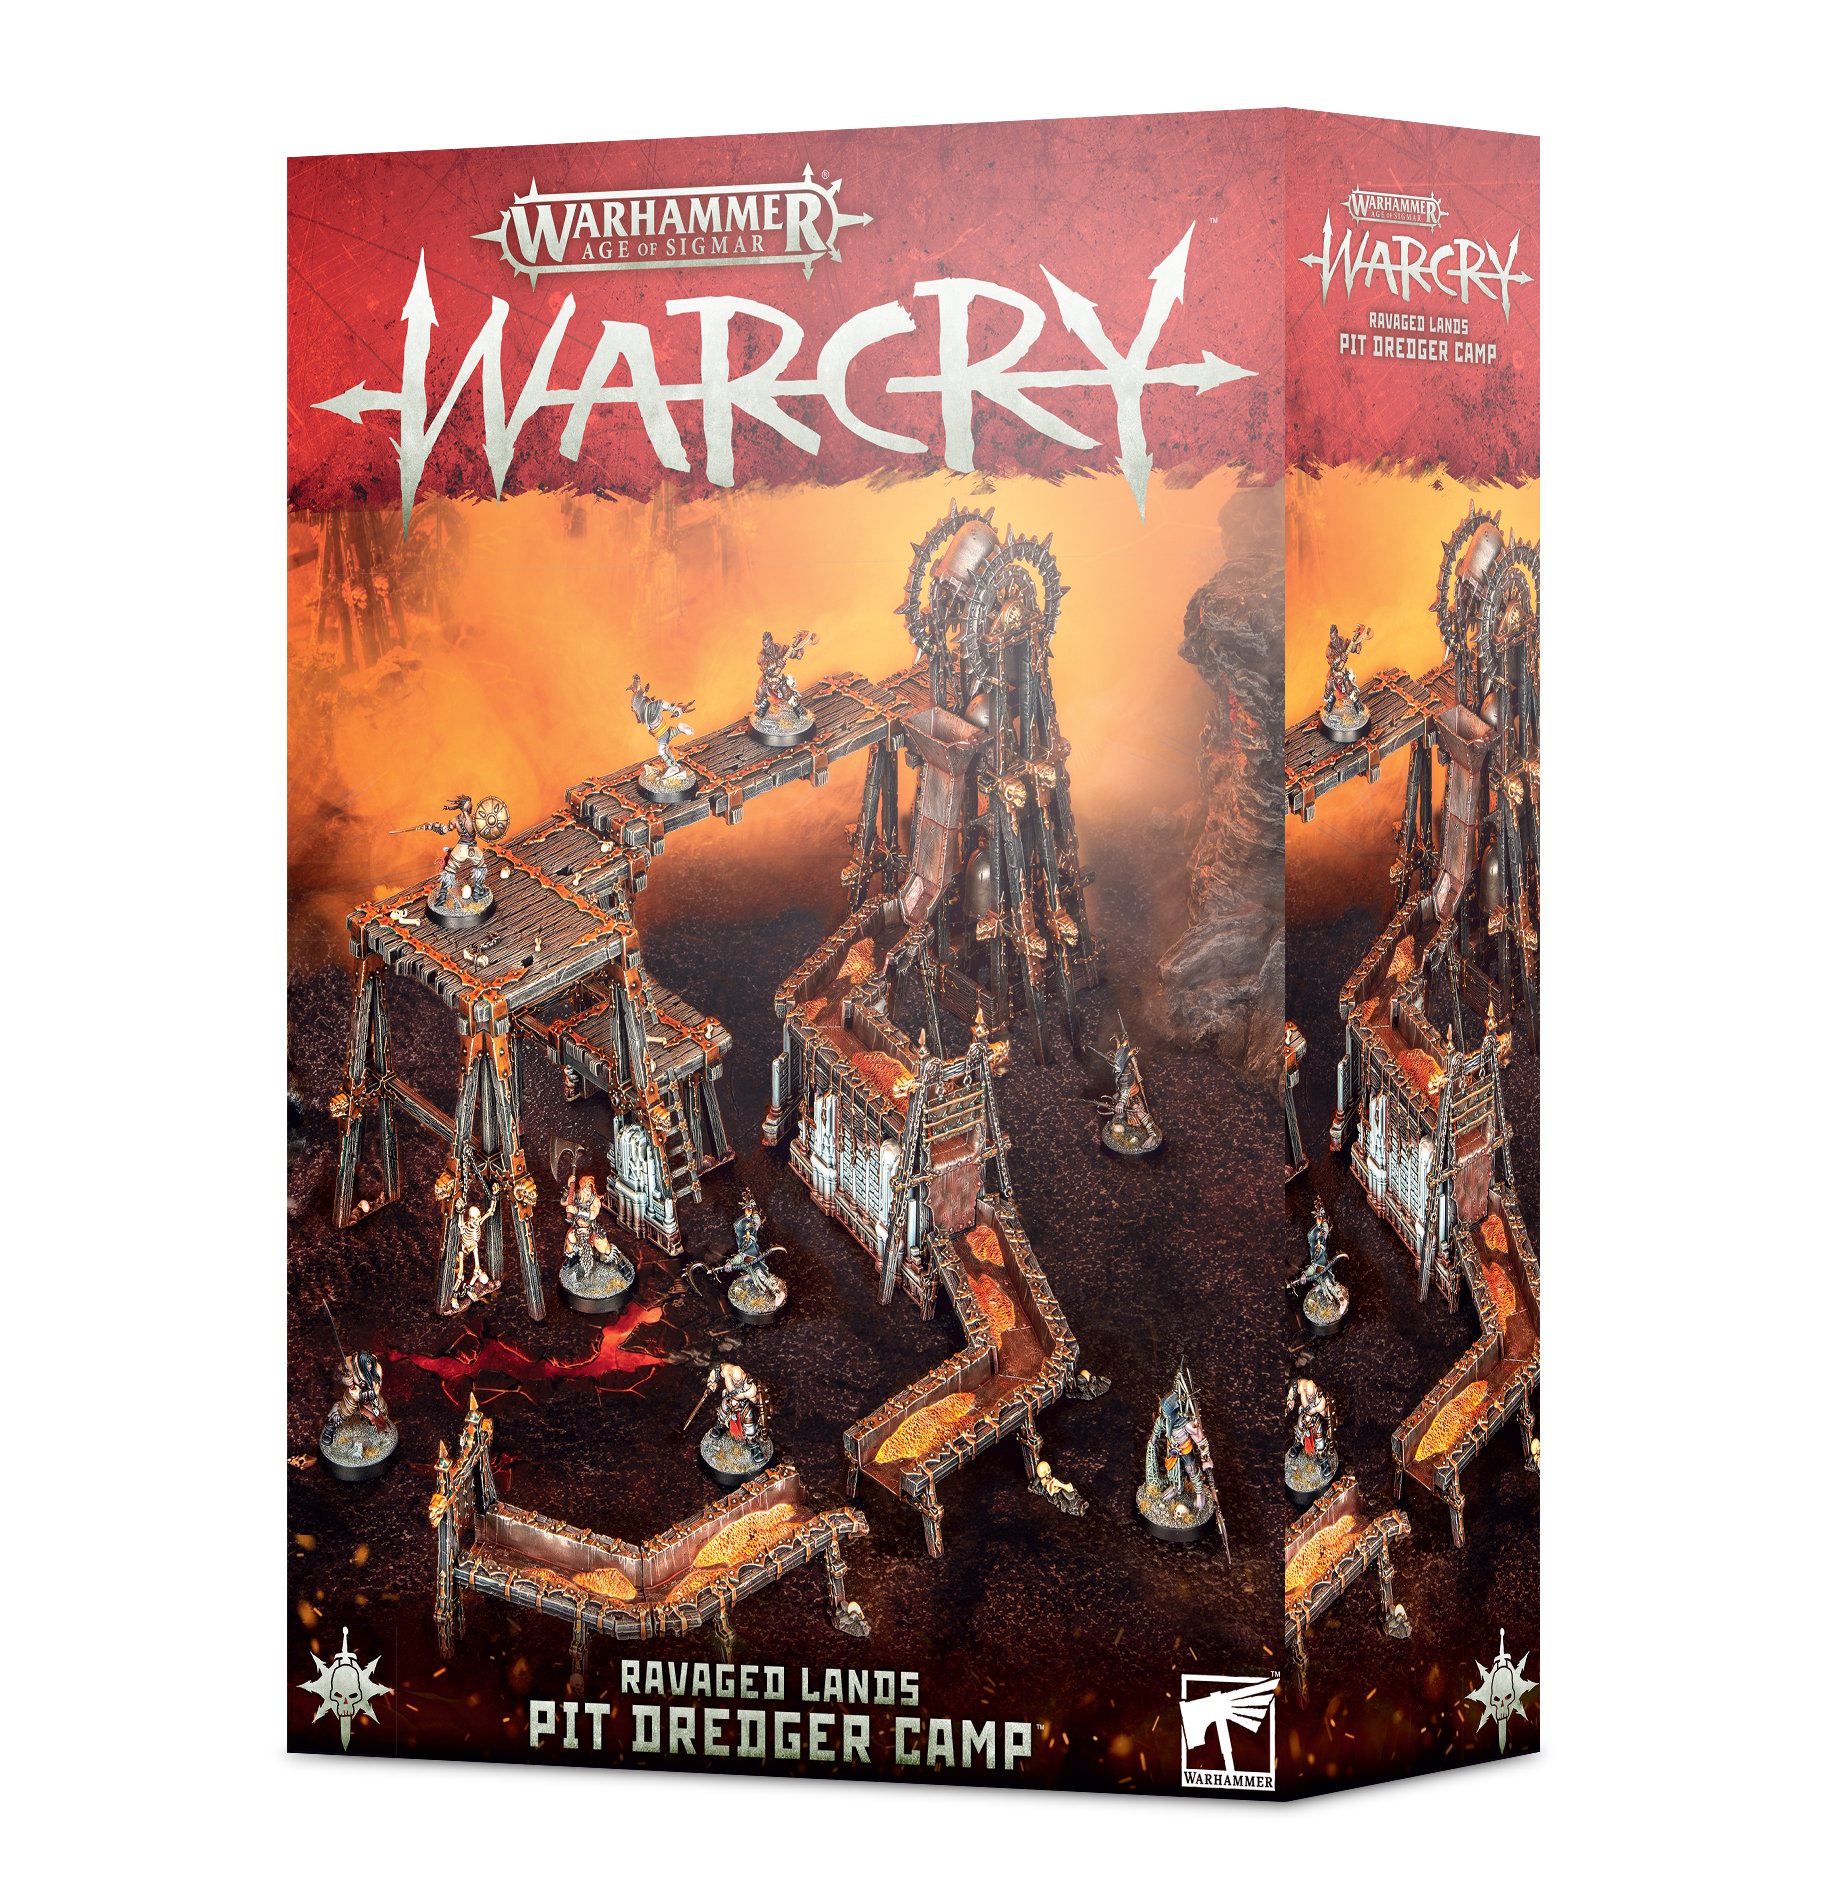 Pit Dredger Camp - WARCRY - 65-18 - Warhammer Age Of Sigmar